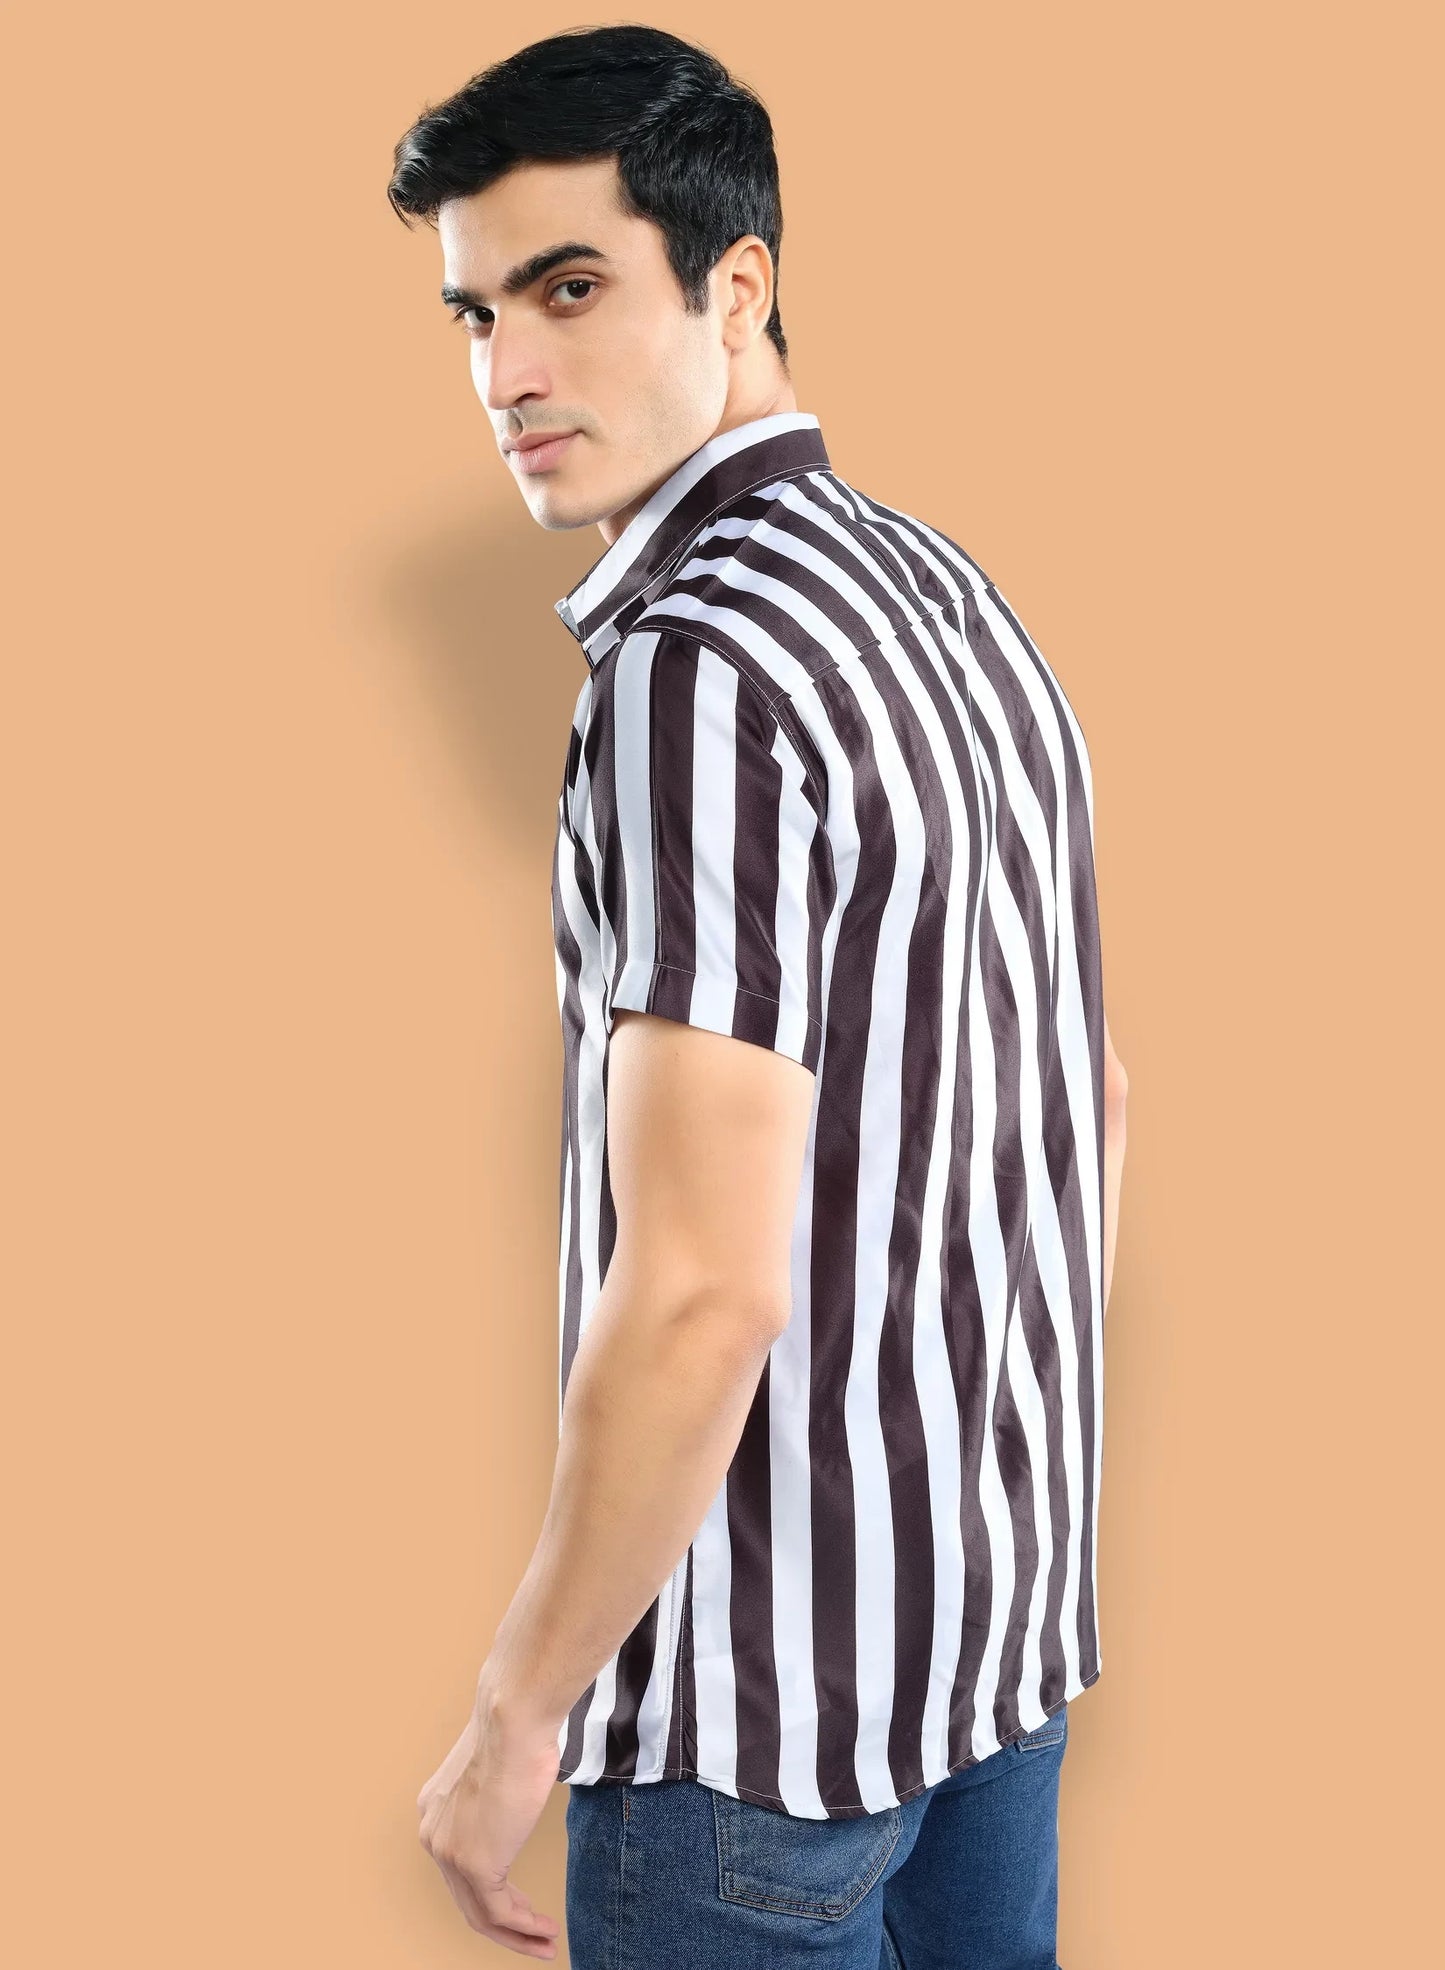 Cuban Shirt, Black and white lines shirt, printed shirts online, mens printed shirt, trendy shirts